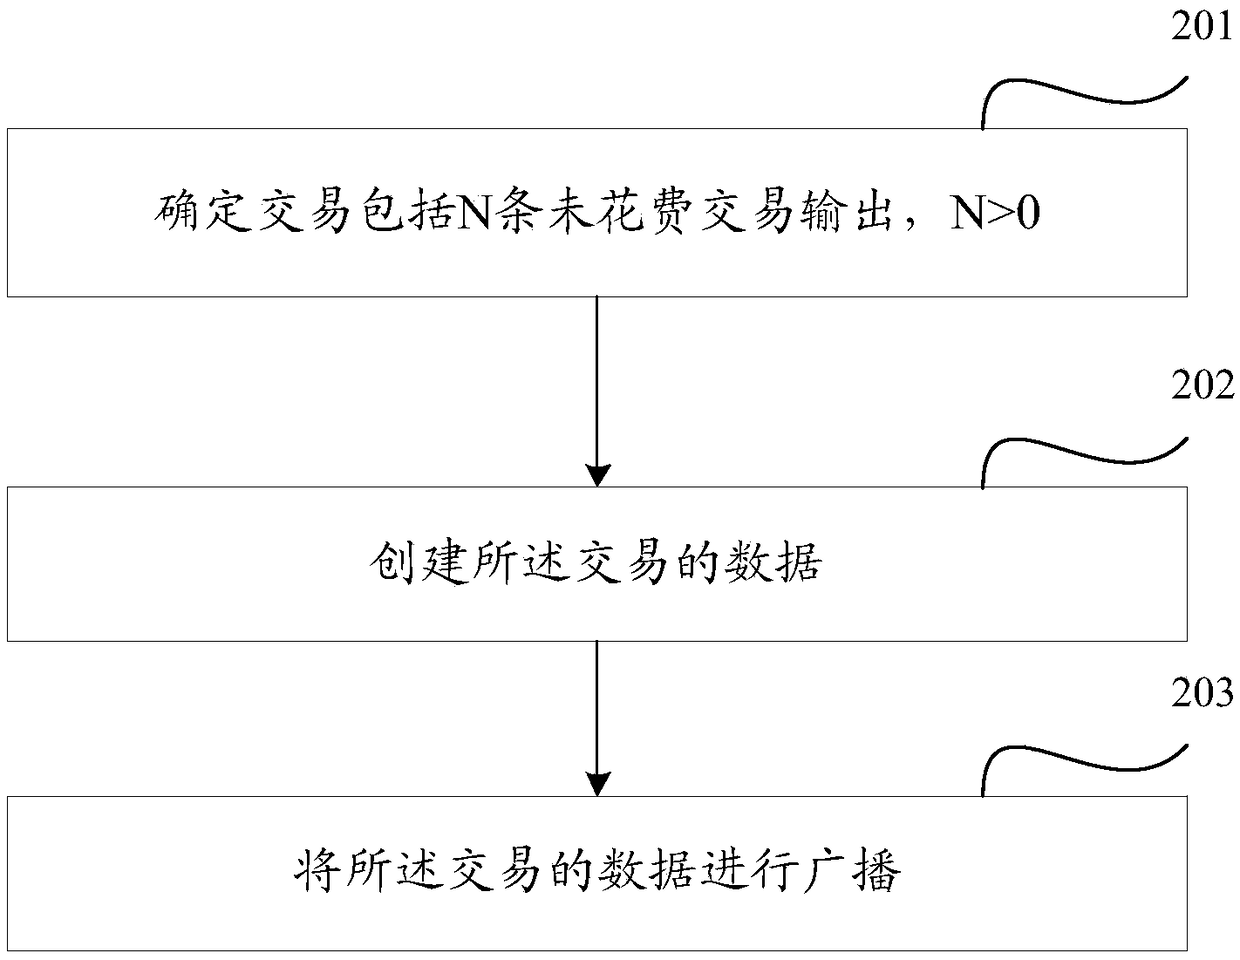 Transaction method and device based on a UTXO model